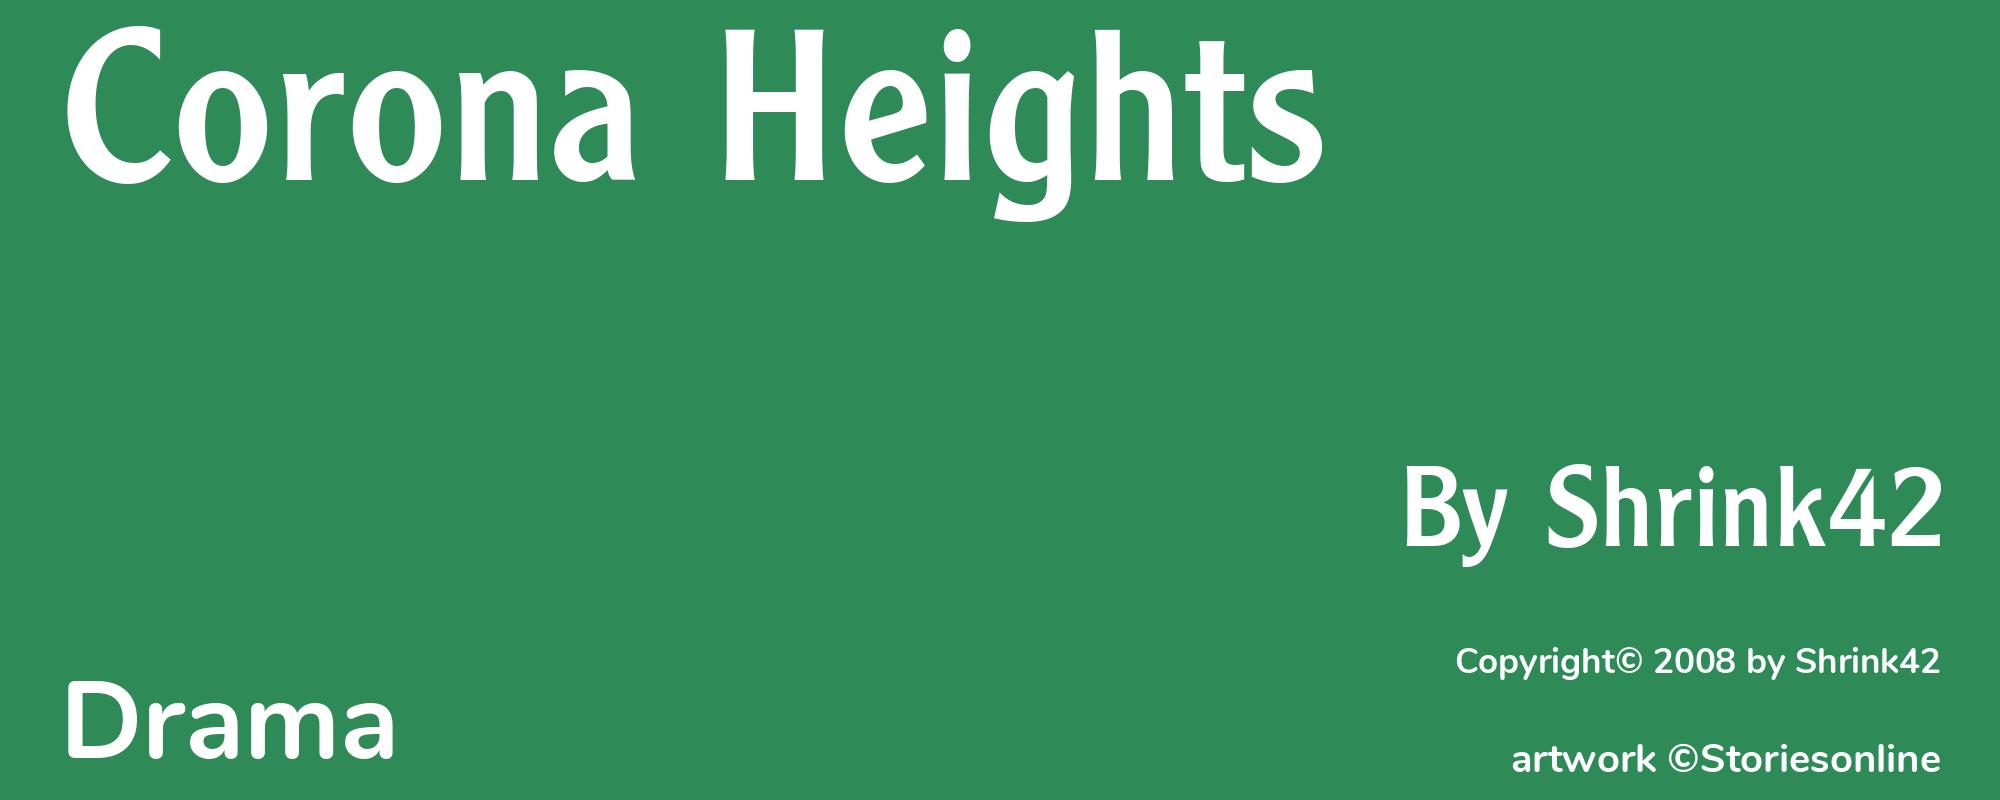 Corona Heights - Cover